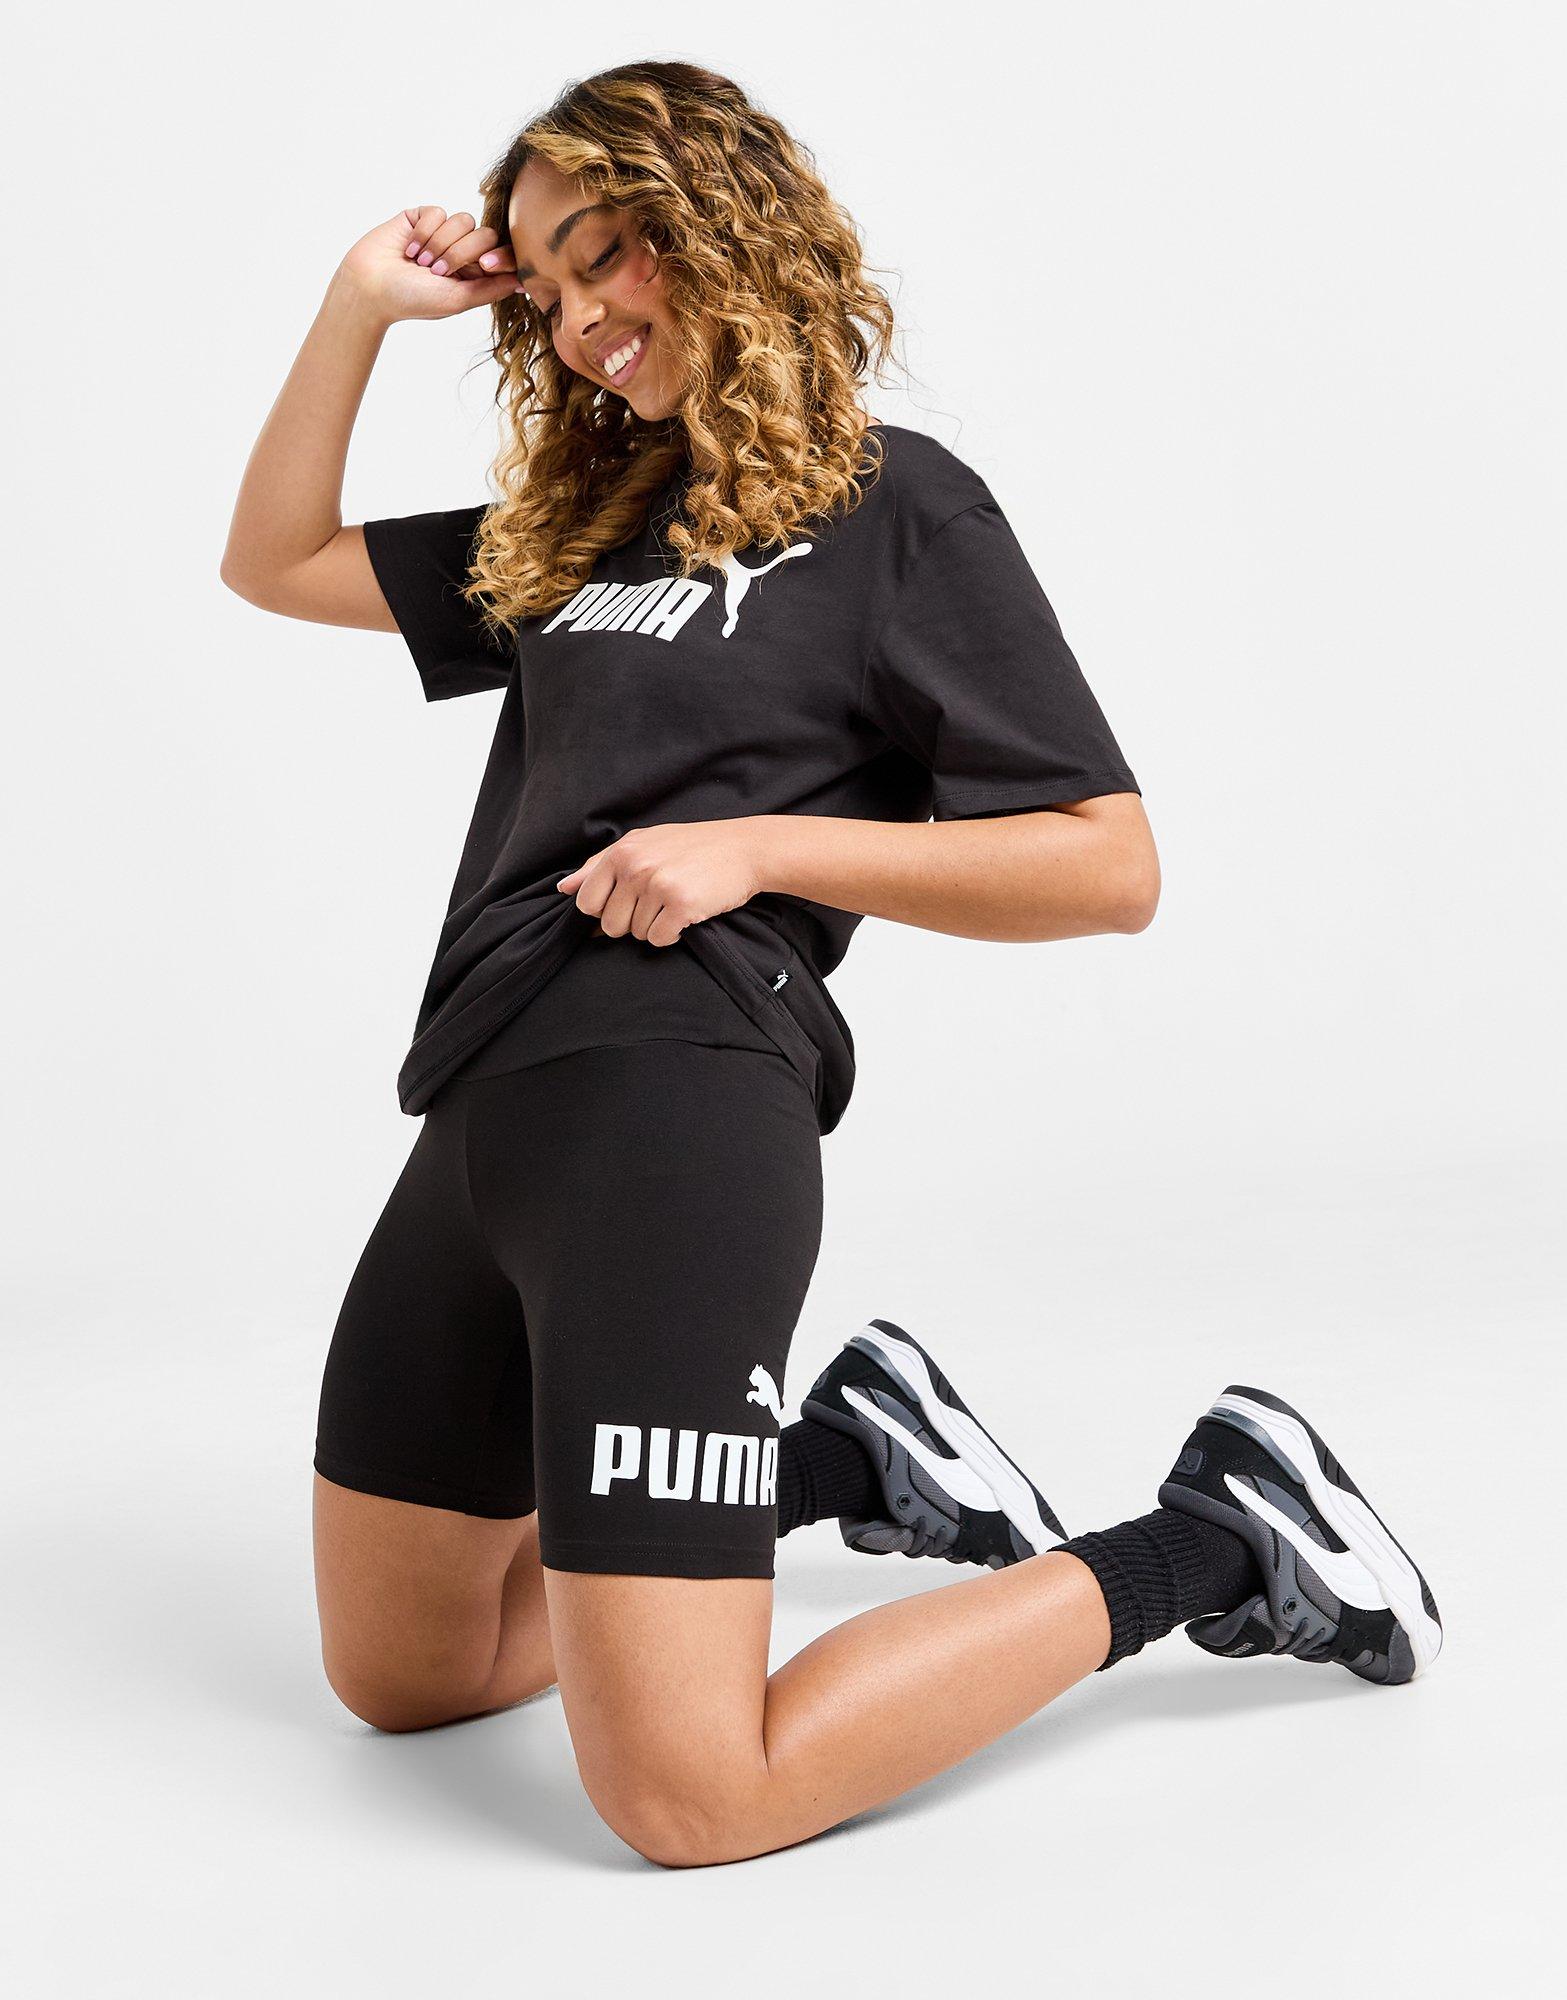 Comprar Leggins Puma Mujer En Oferta - Puma Online